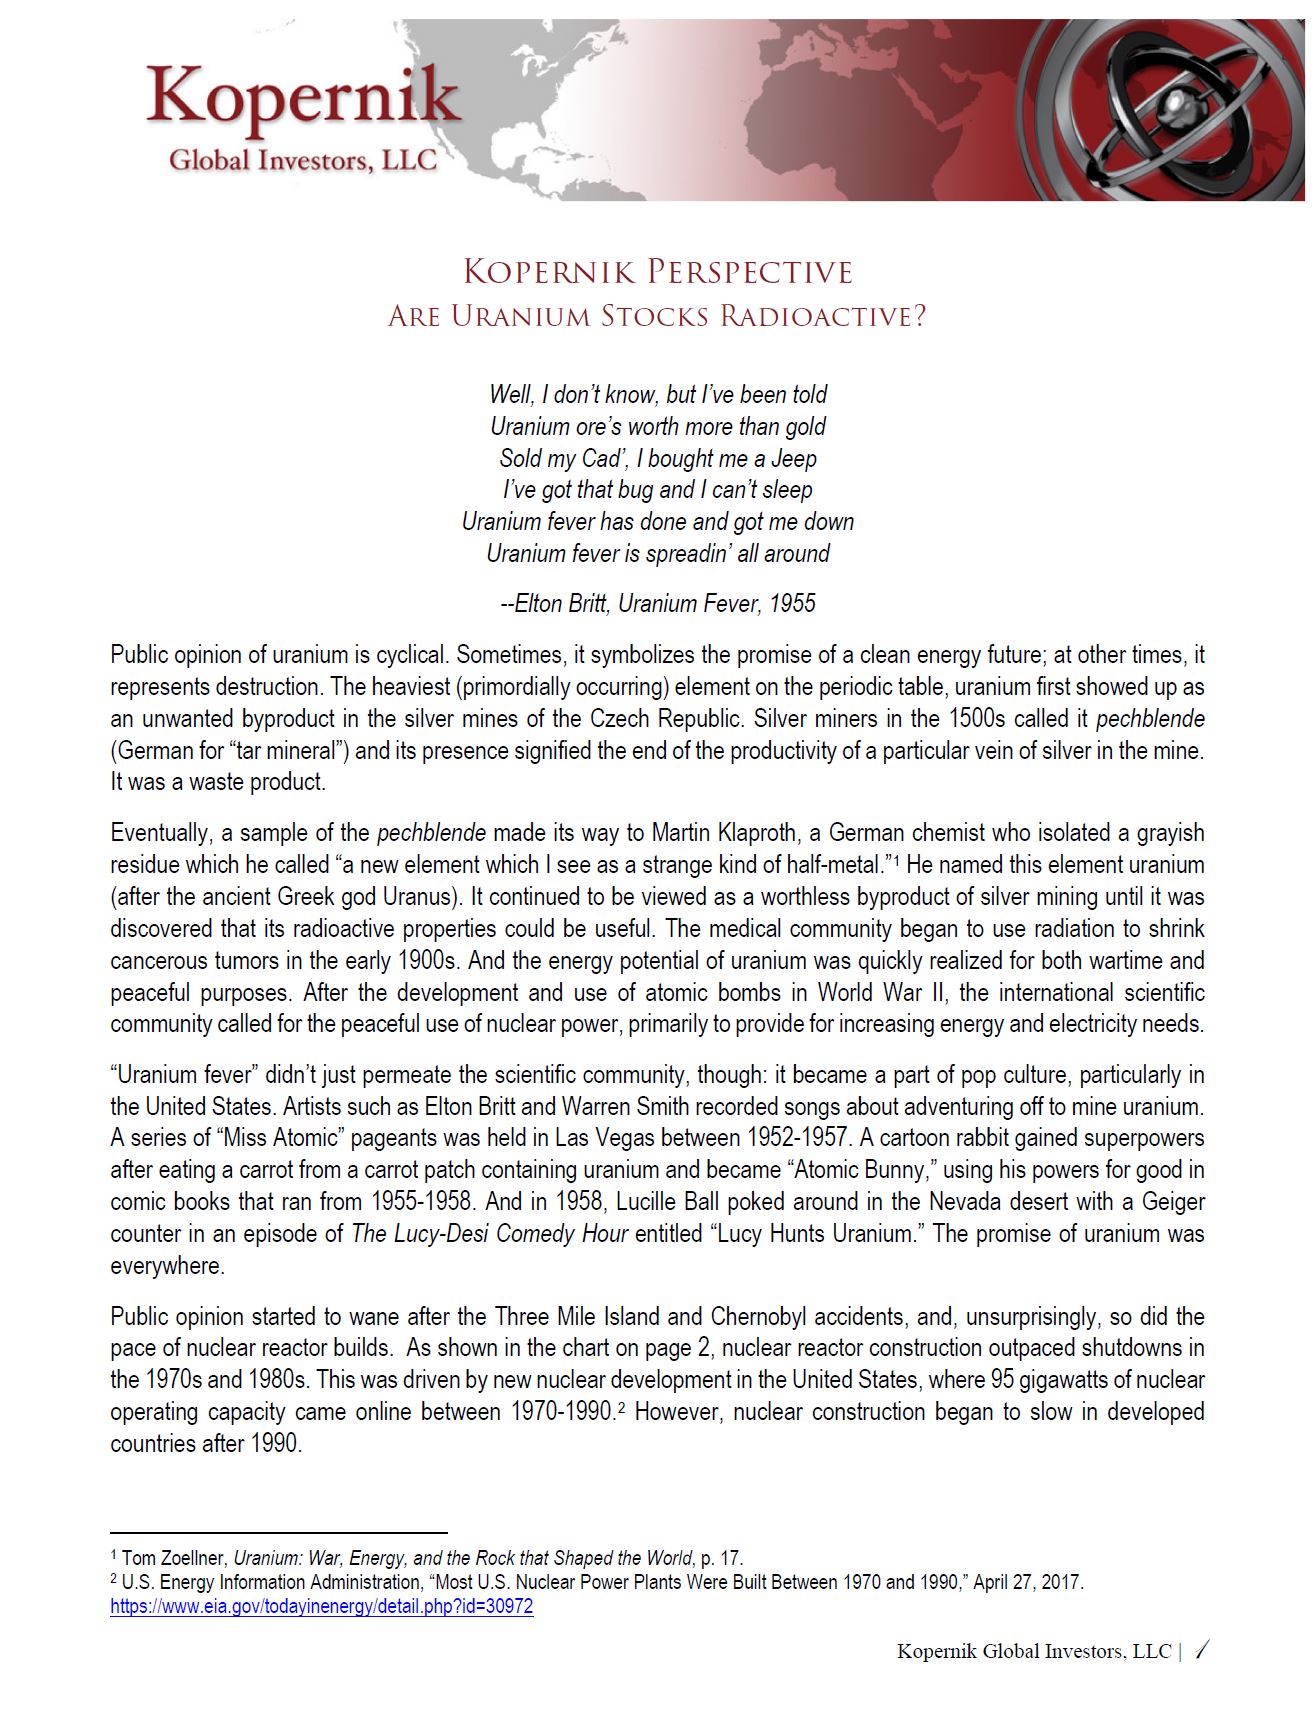 Kopernik Perspective: Uranium (Aug 2020 Update)